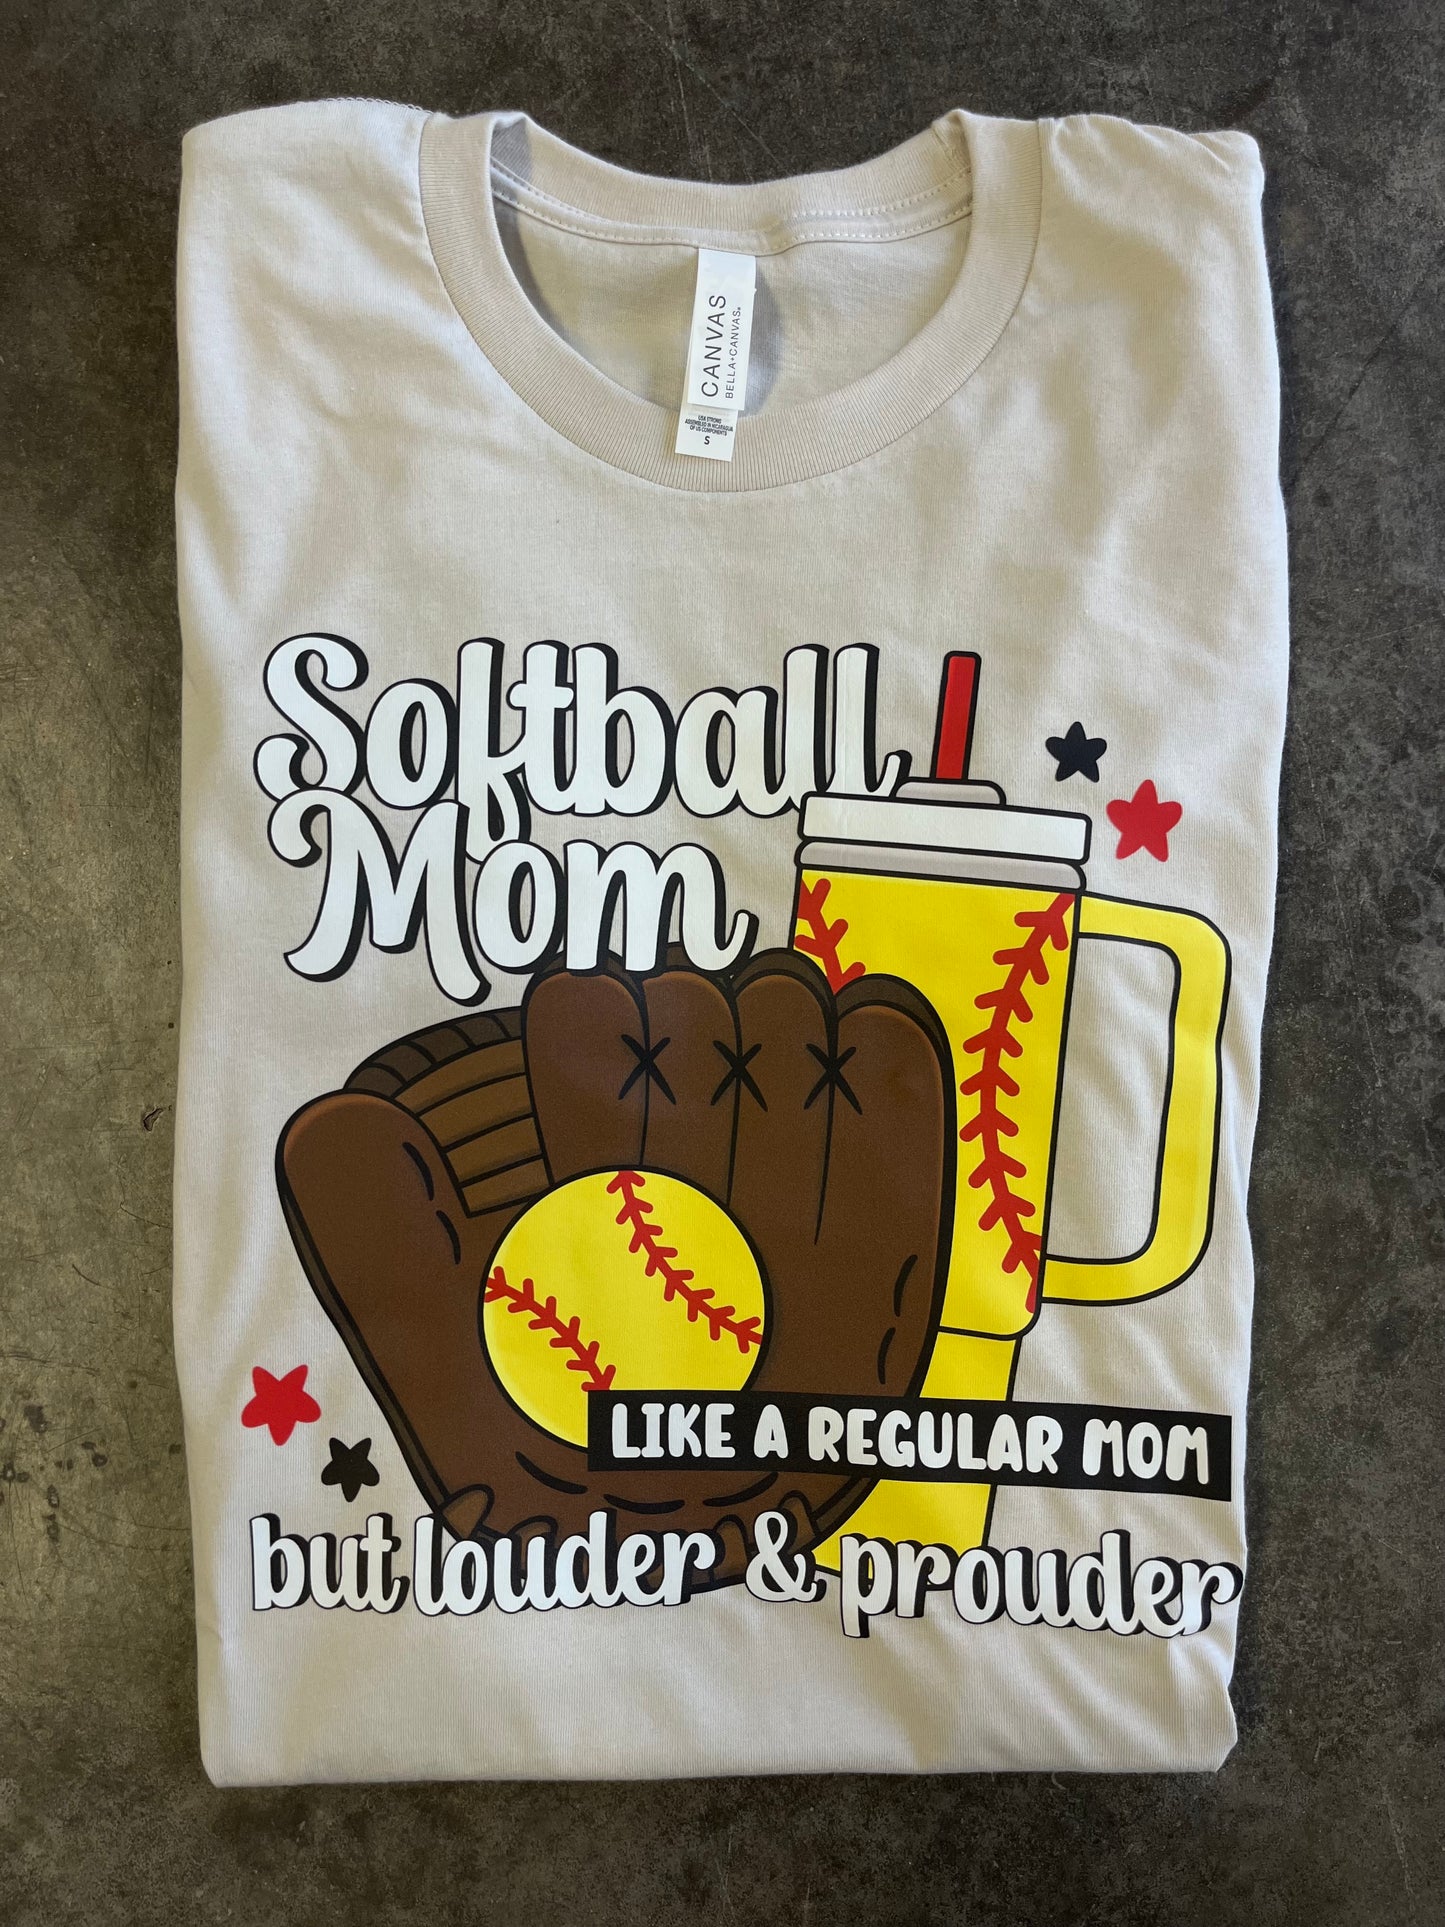 “Softball Mom” Tee